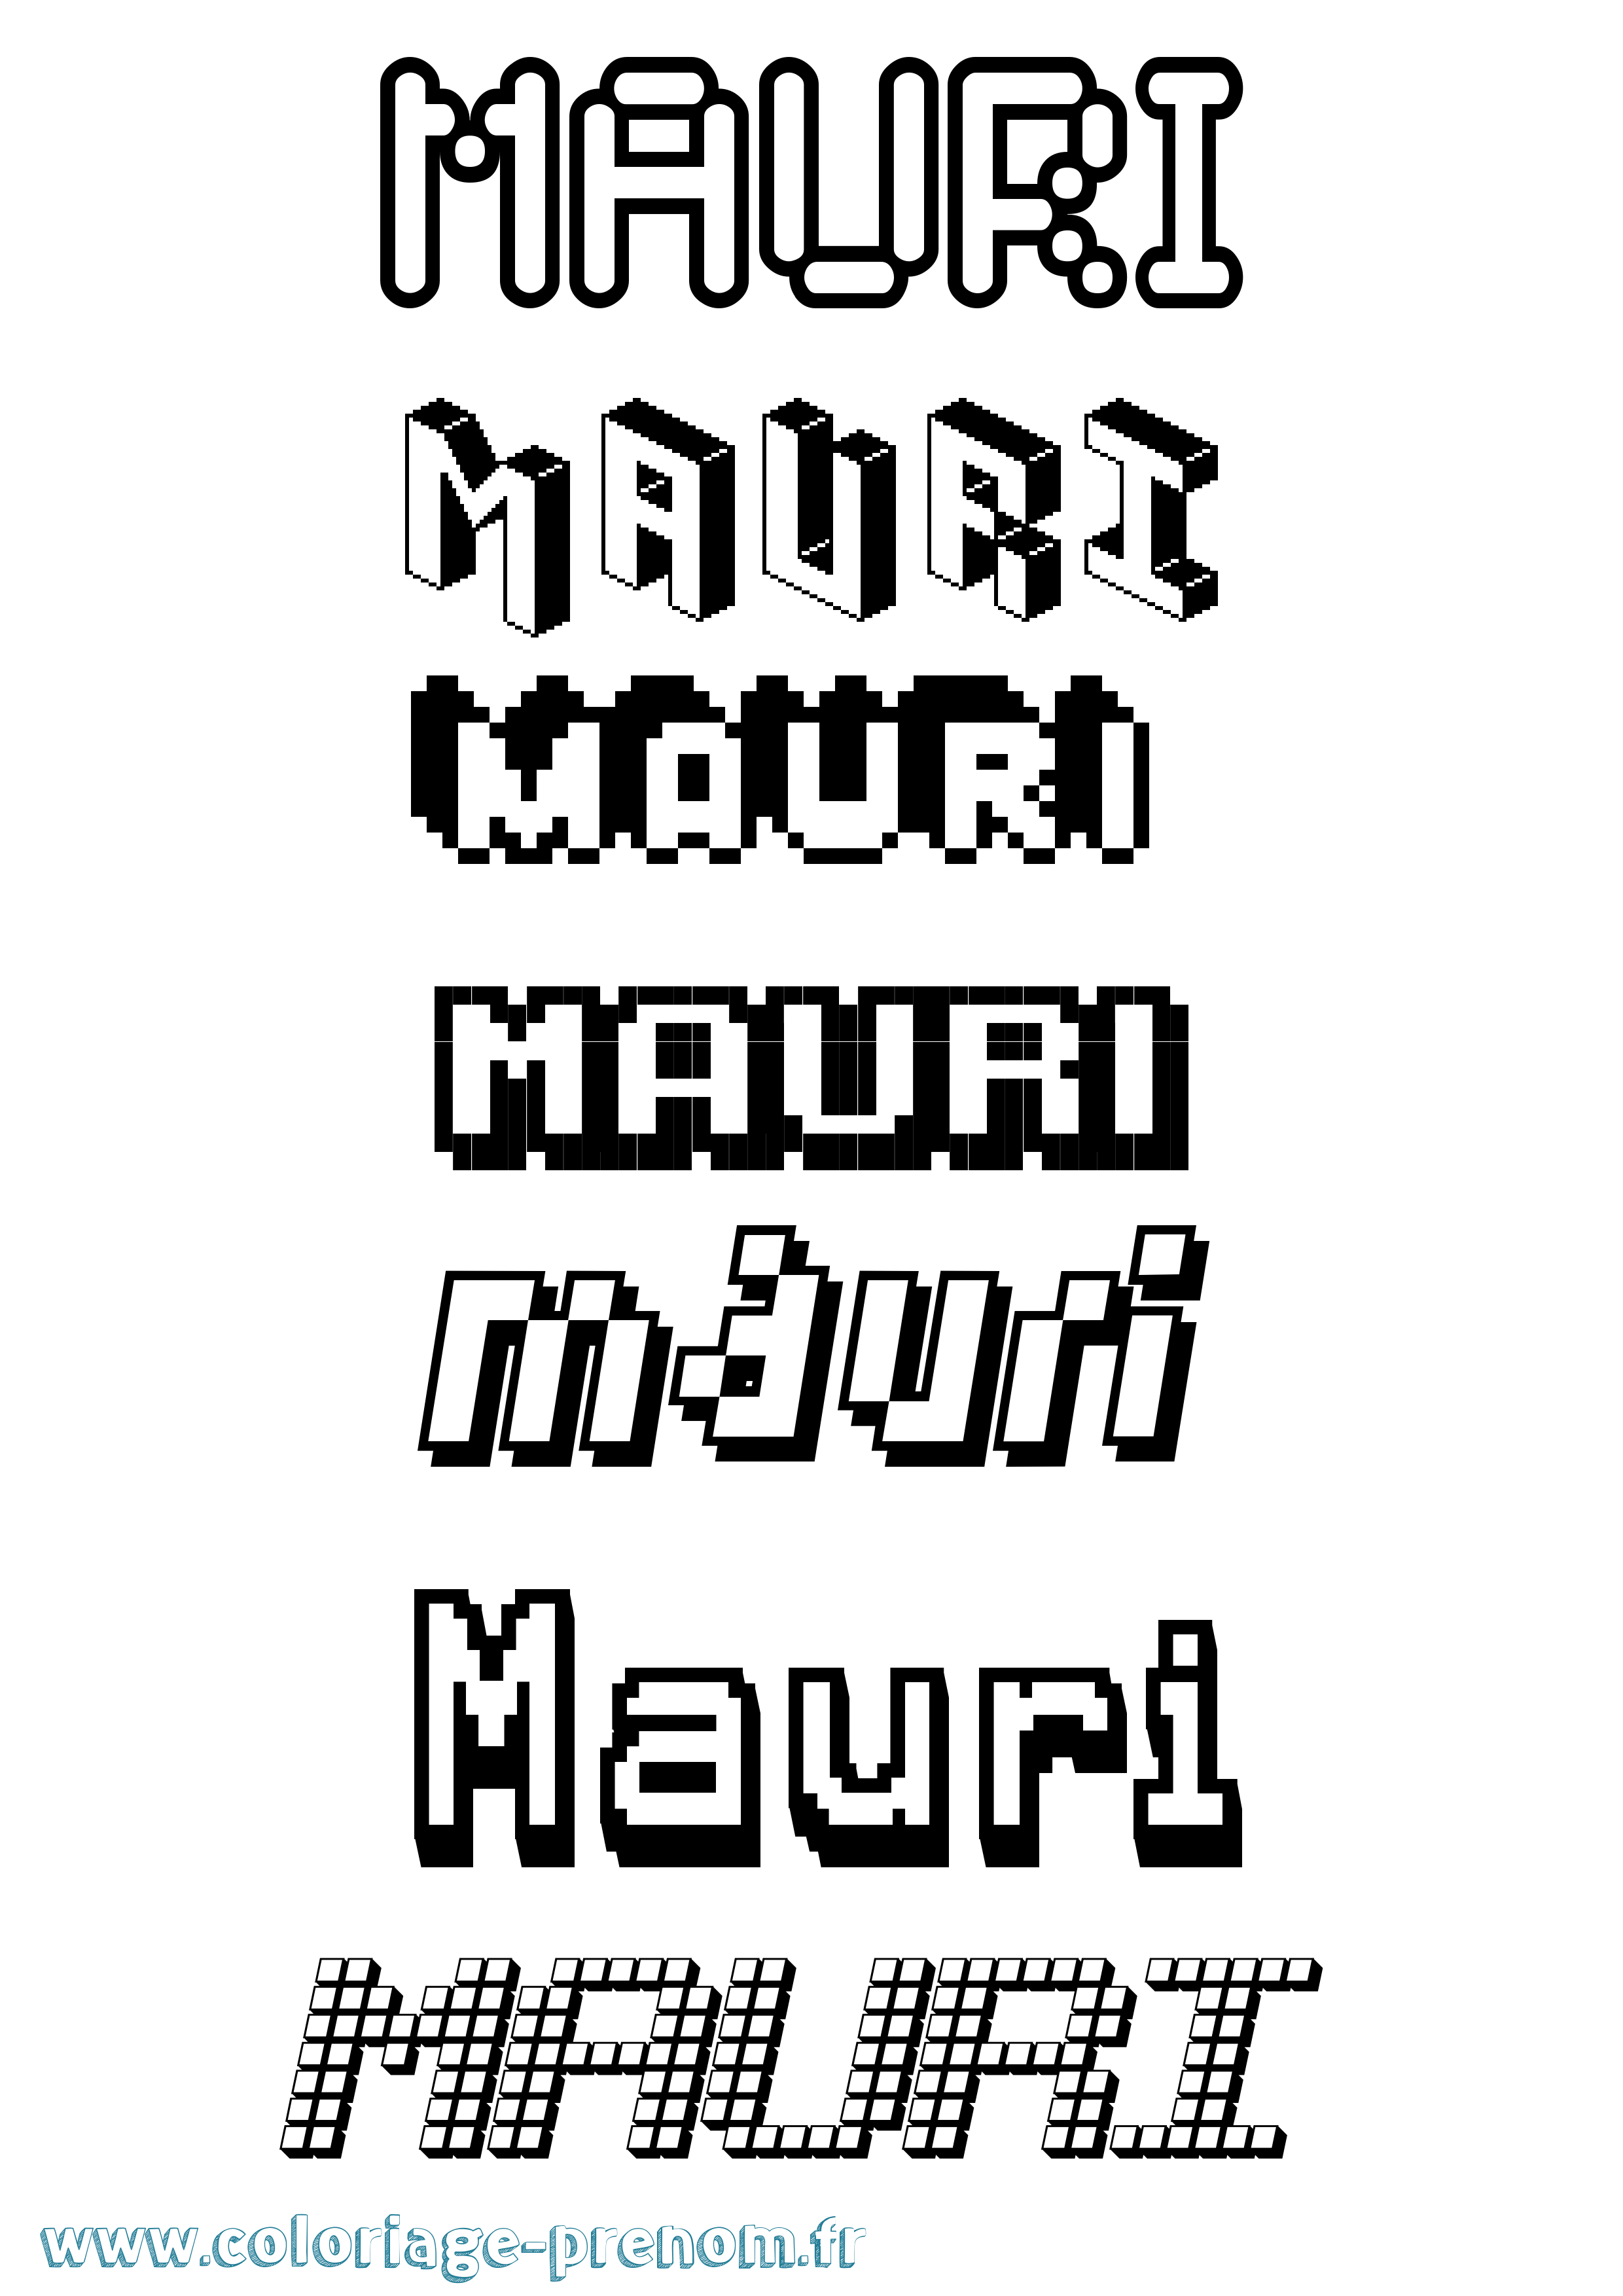 Coloriage prénom Mauri Pixel